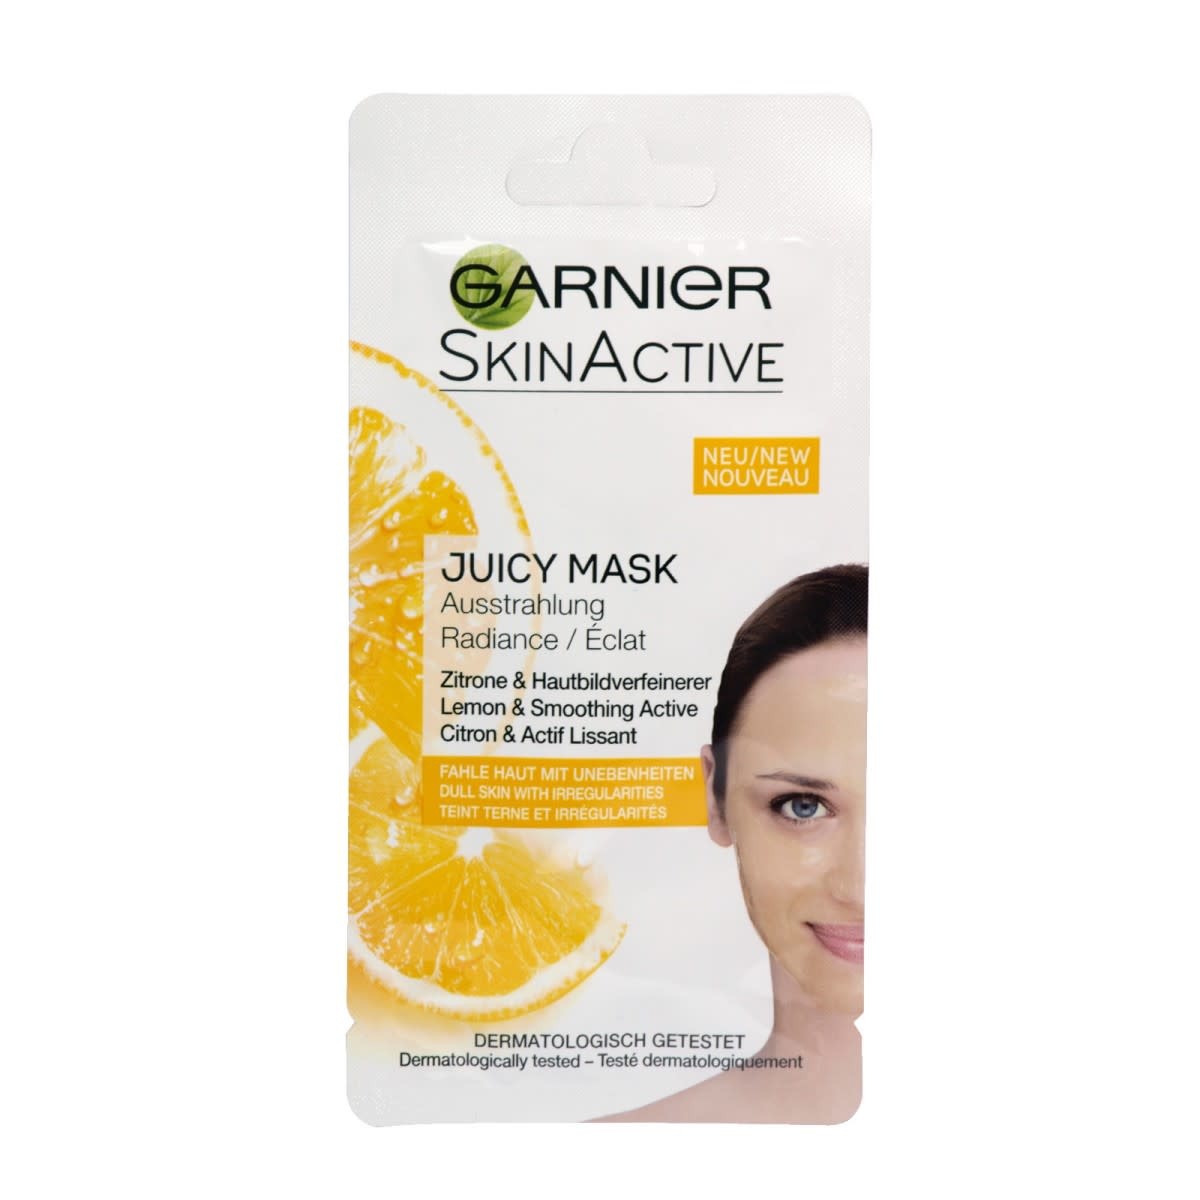 Маски garnier отзывы. Garnier Skin Active maschere маски для лица. Garnier SKINACTIVE маска заряд молодости. Garnier Skin ЭACTIVE маска тканевая заряд молодости. Garnier тканевая маска для глаз.